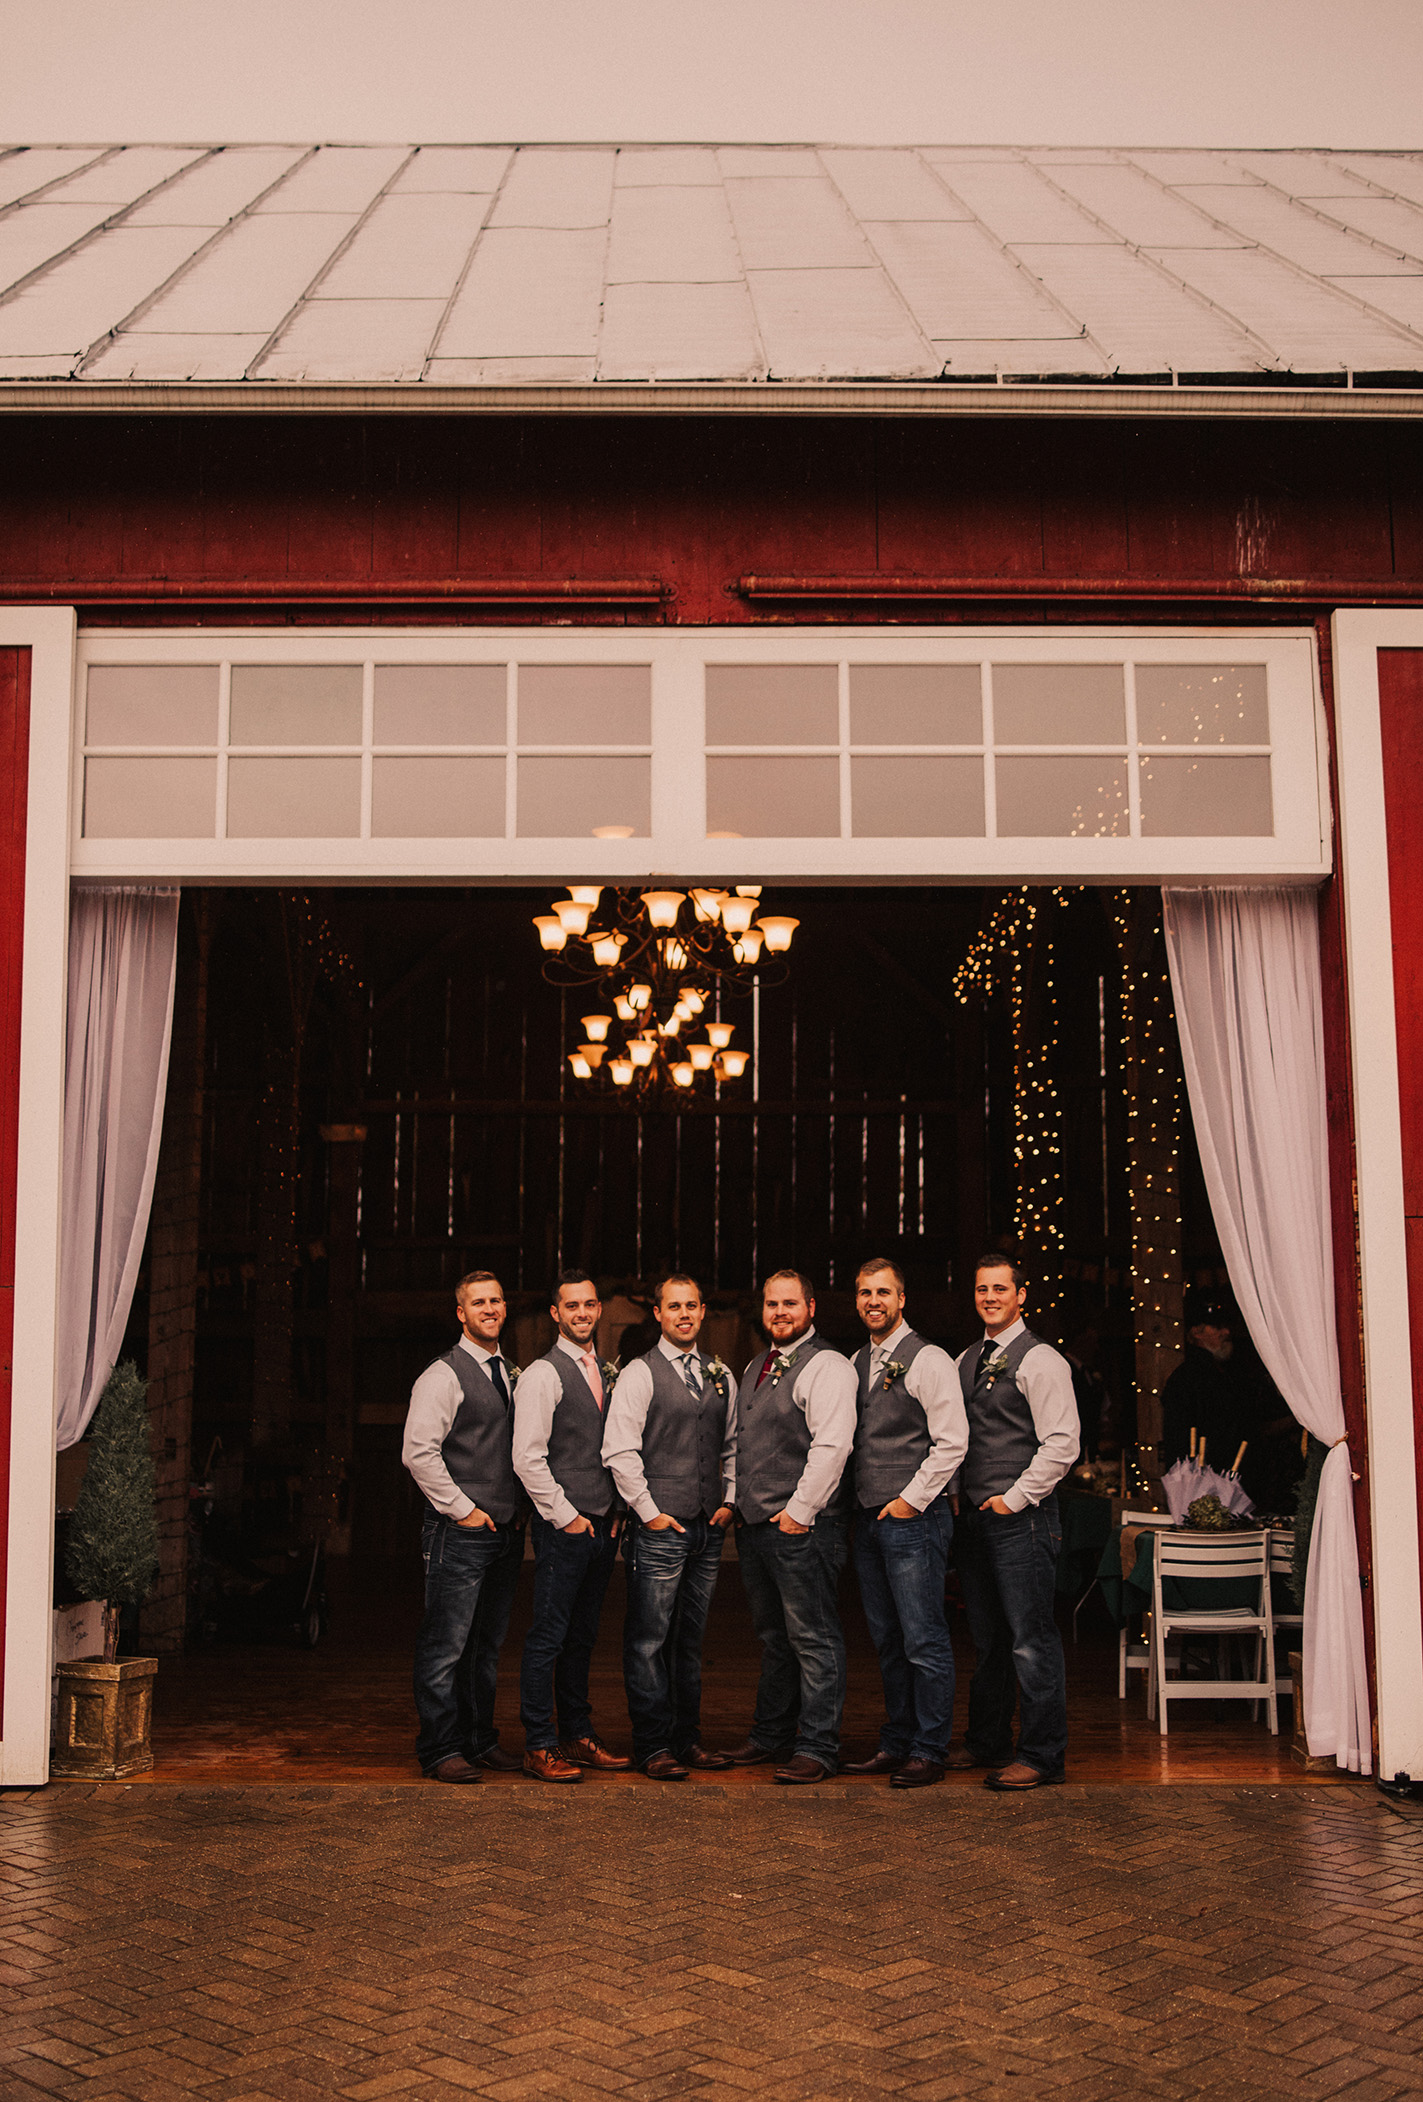 groom, groomsmen, groom attire, tux, suit, vests, casual wedding attire